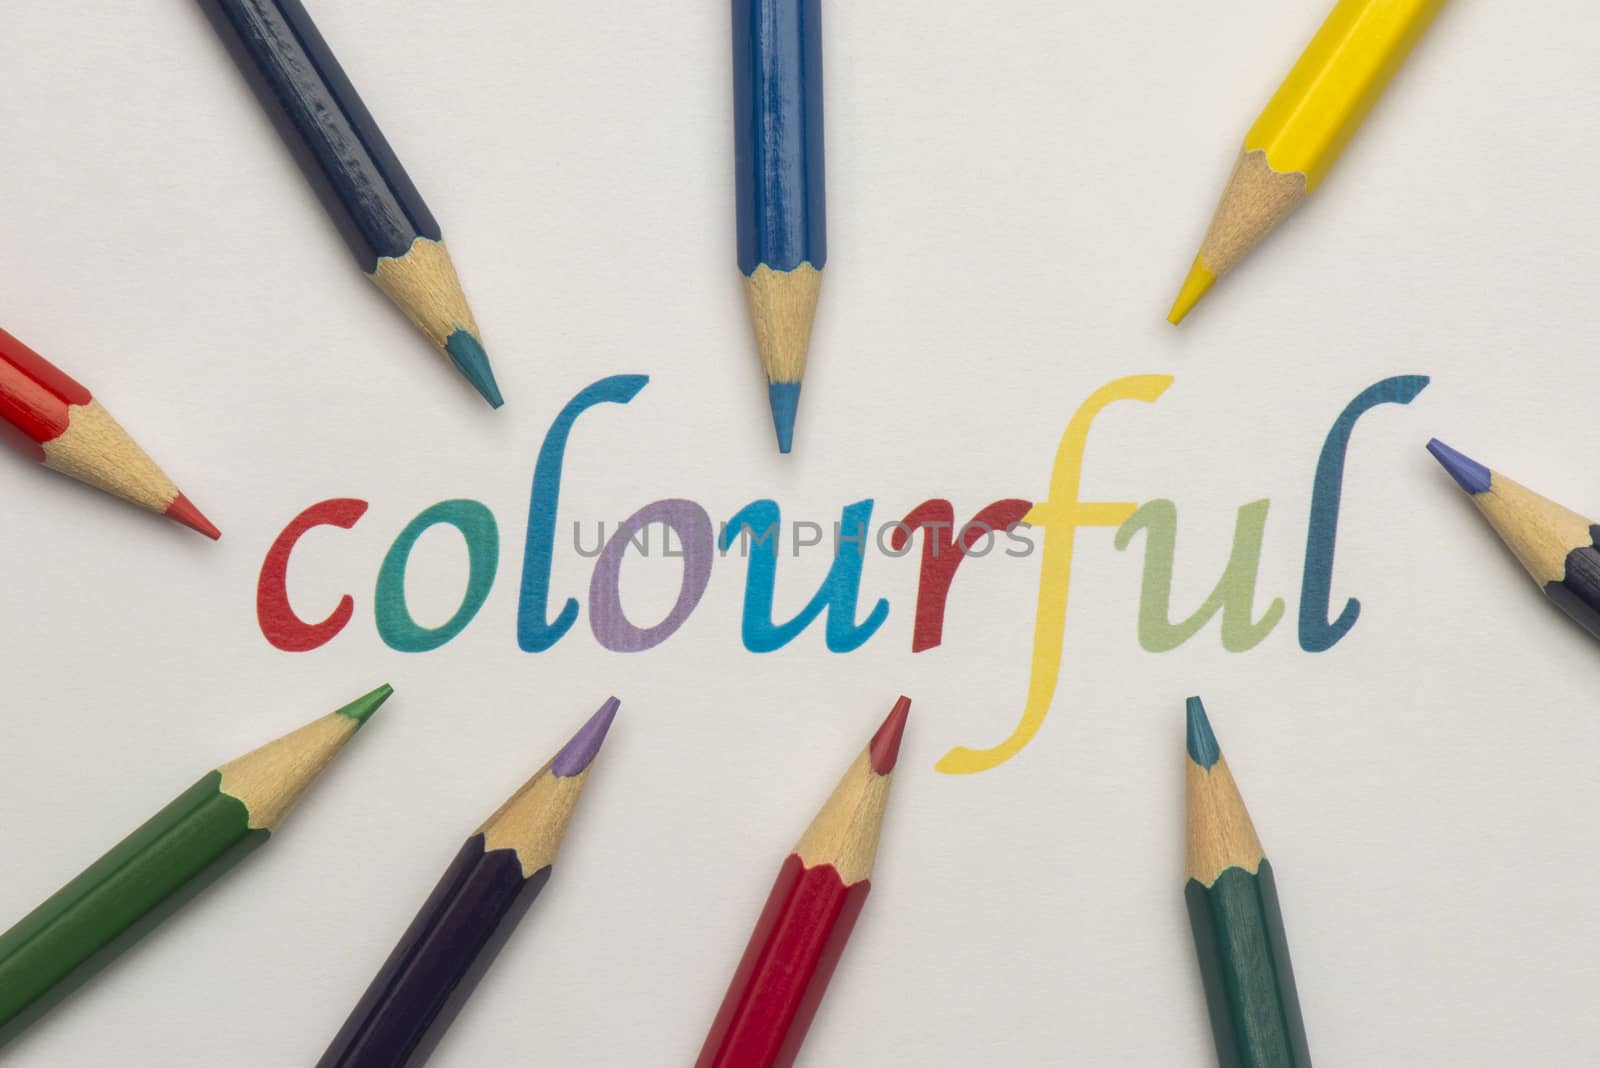 wooden colour pencils, Colourful by Tofotografie